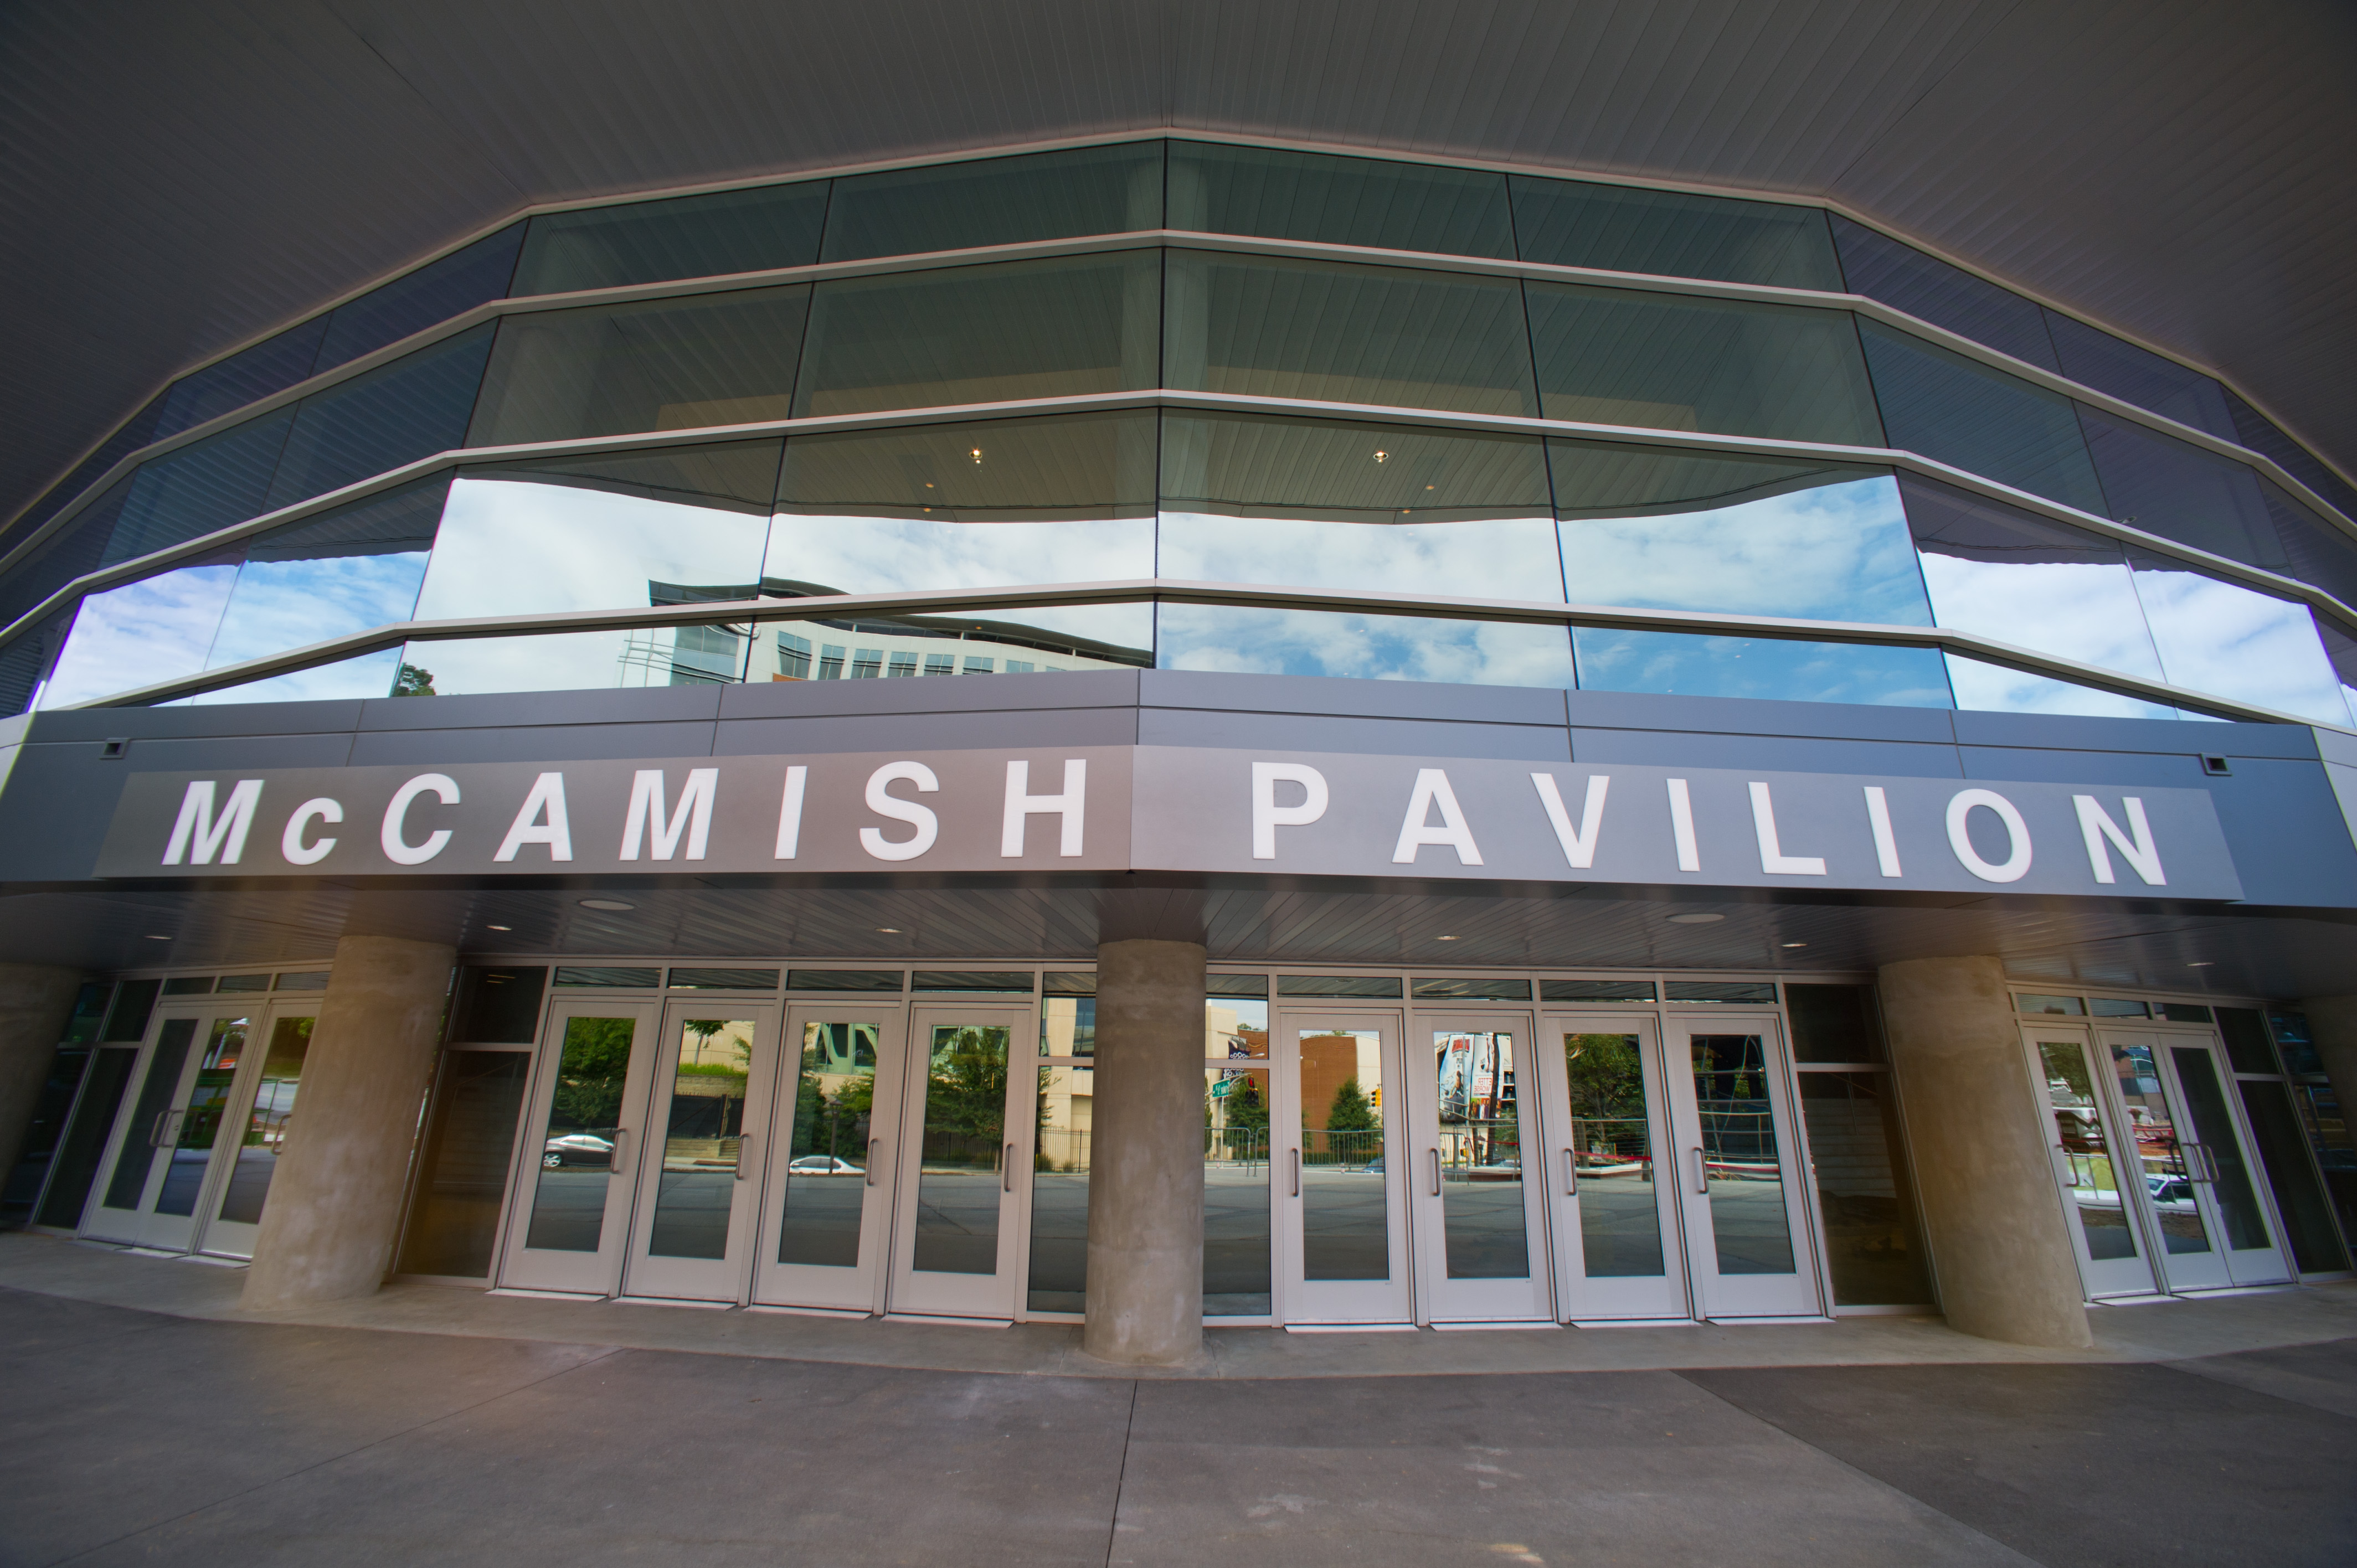 McCamish Pavilion (Photo Credit: Rob Felt)